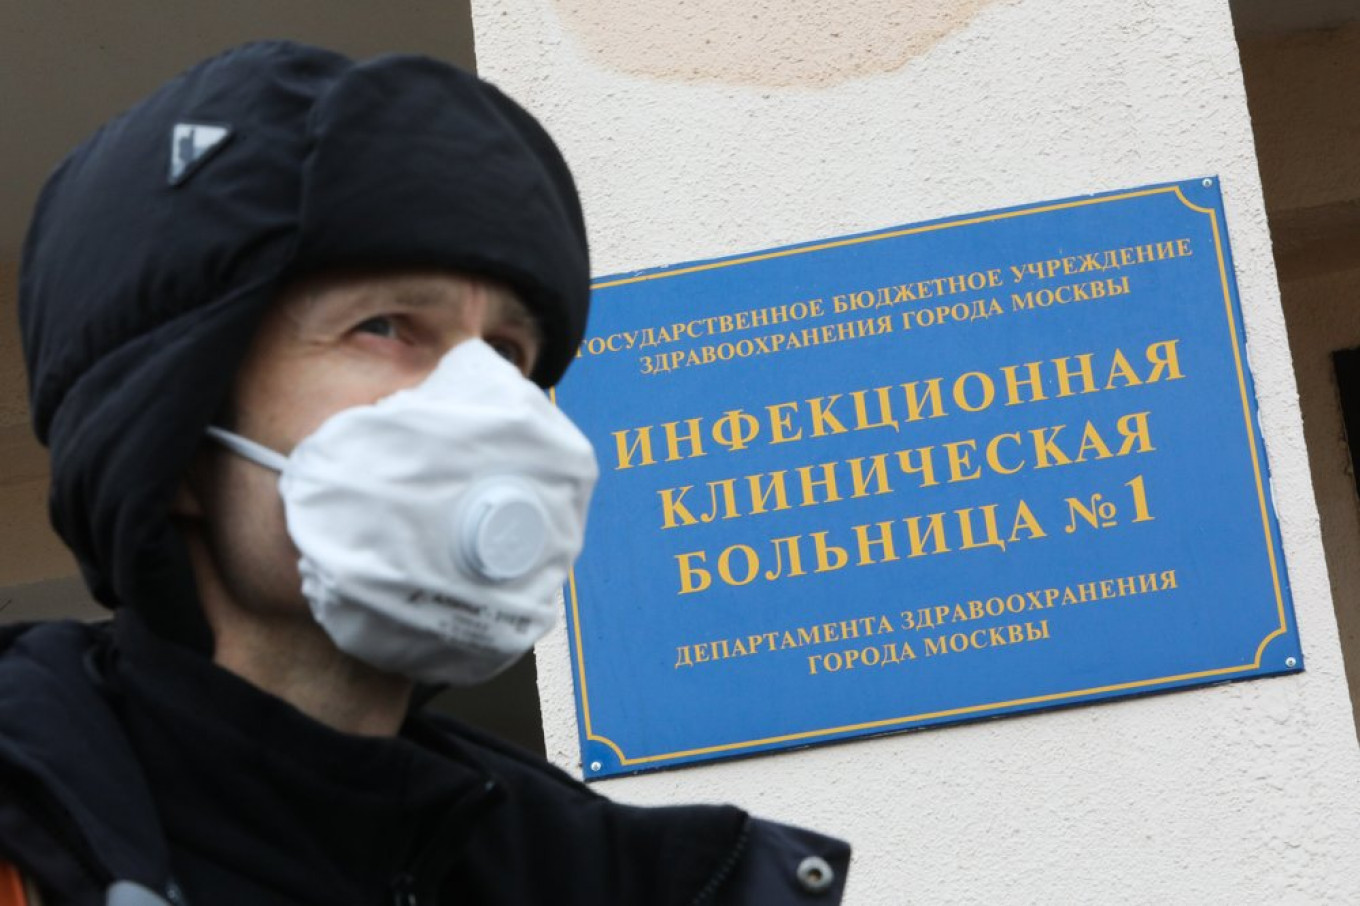 Coronavirus in Russia: The Latest News | March 11